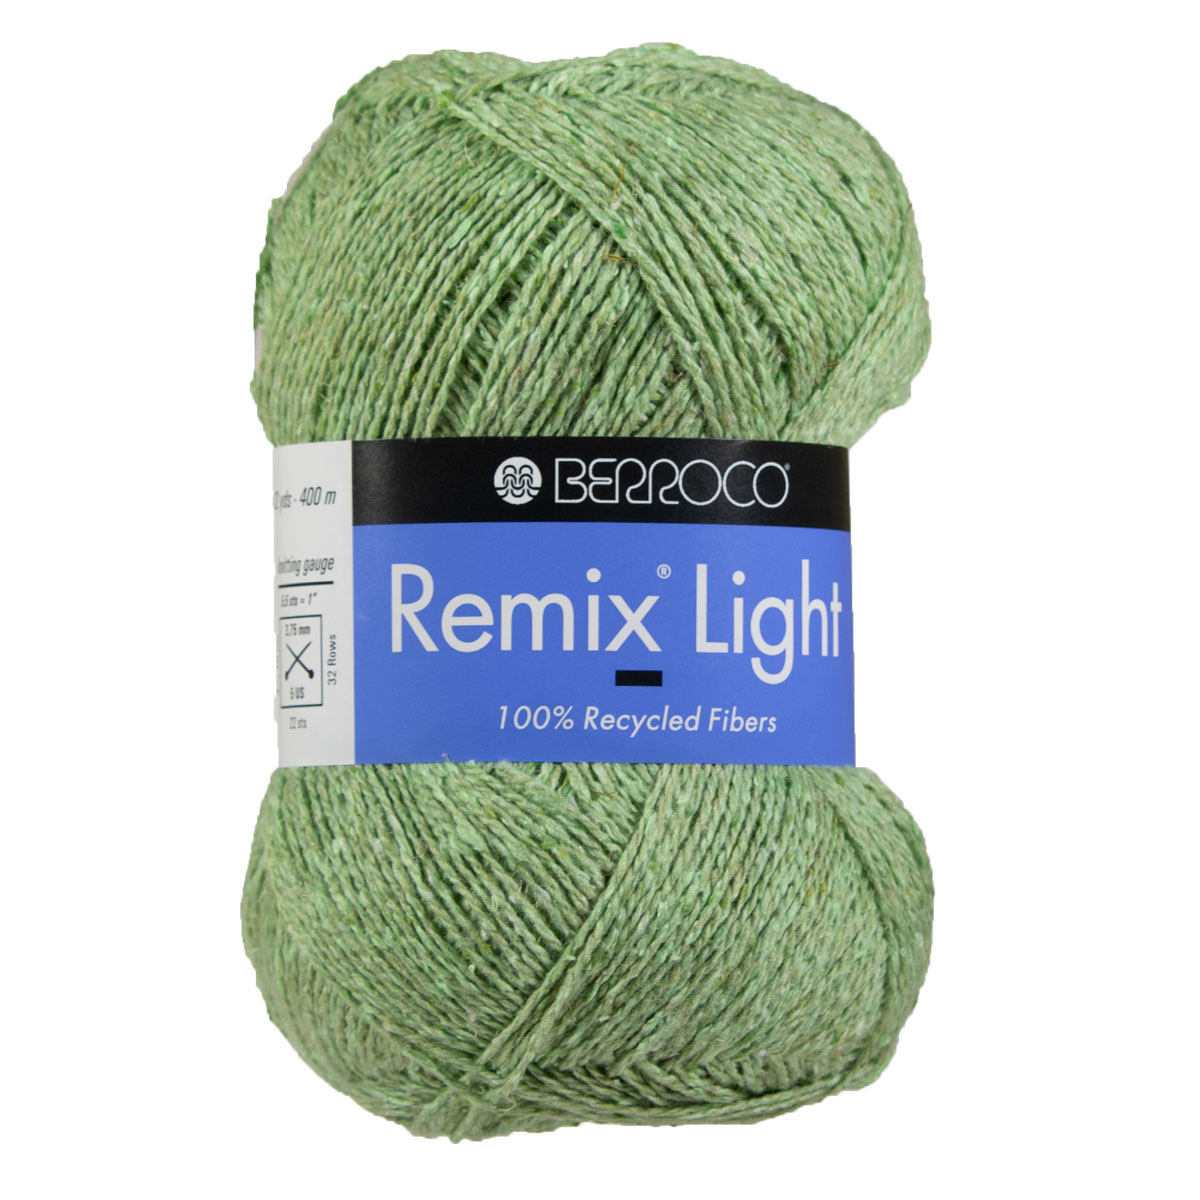 Berroco Remix Light Yarn - 6962 New Leaf Reviews at Jimmy Beans Wool